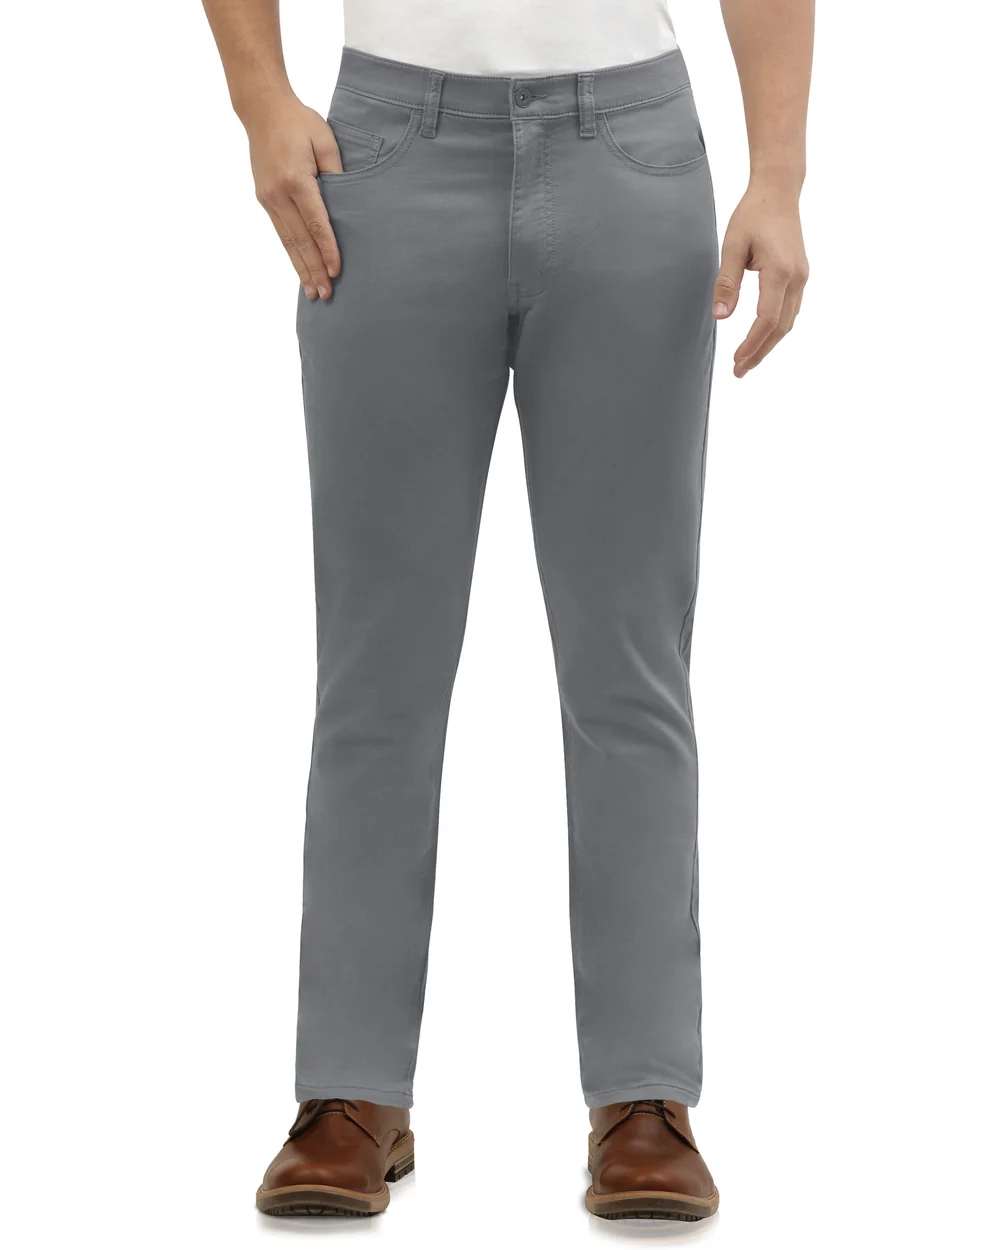 Pantalon casual slim fit anywhere twill gris claro